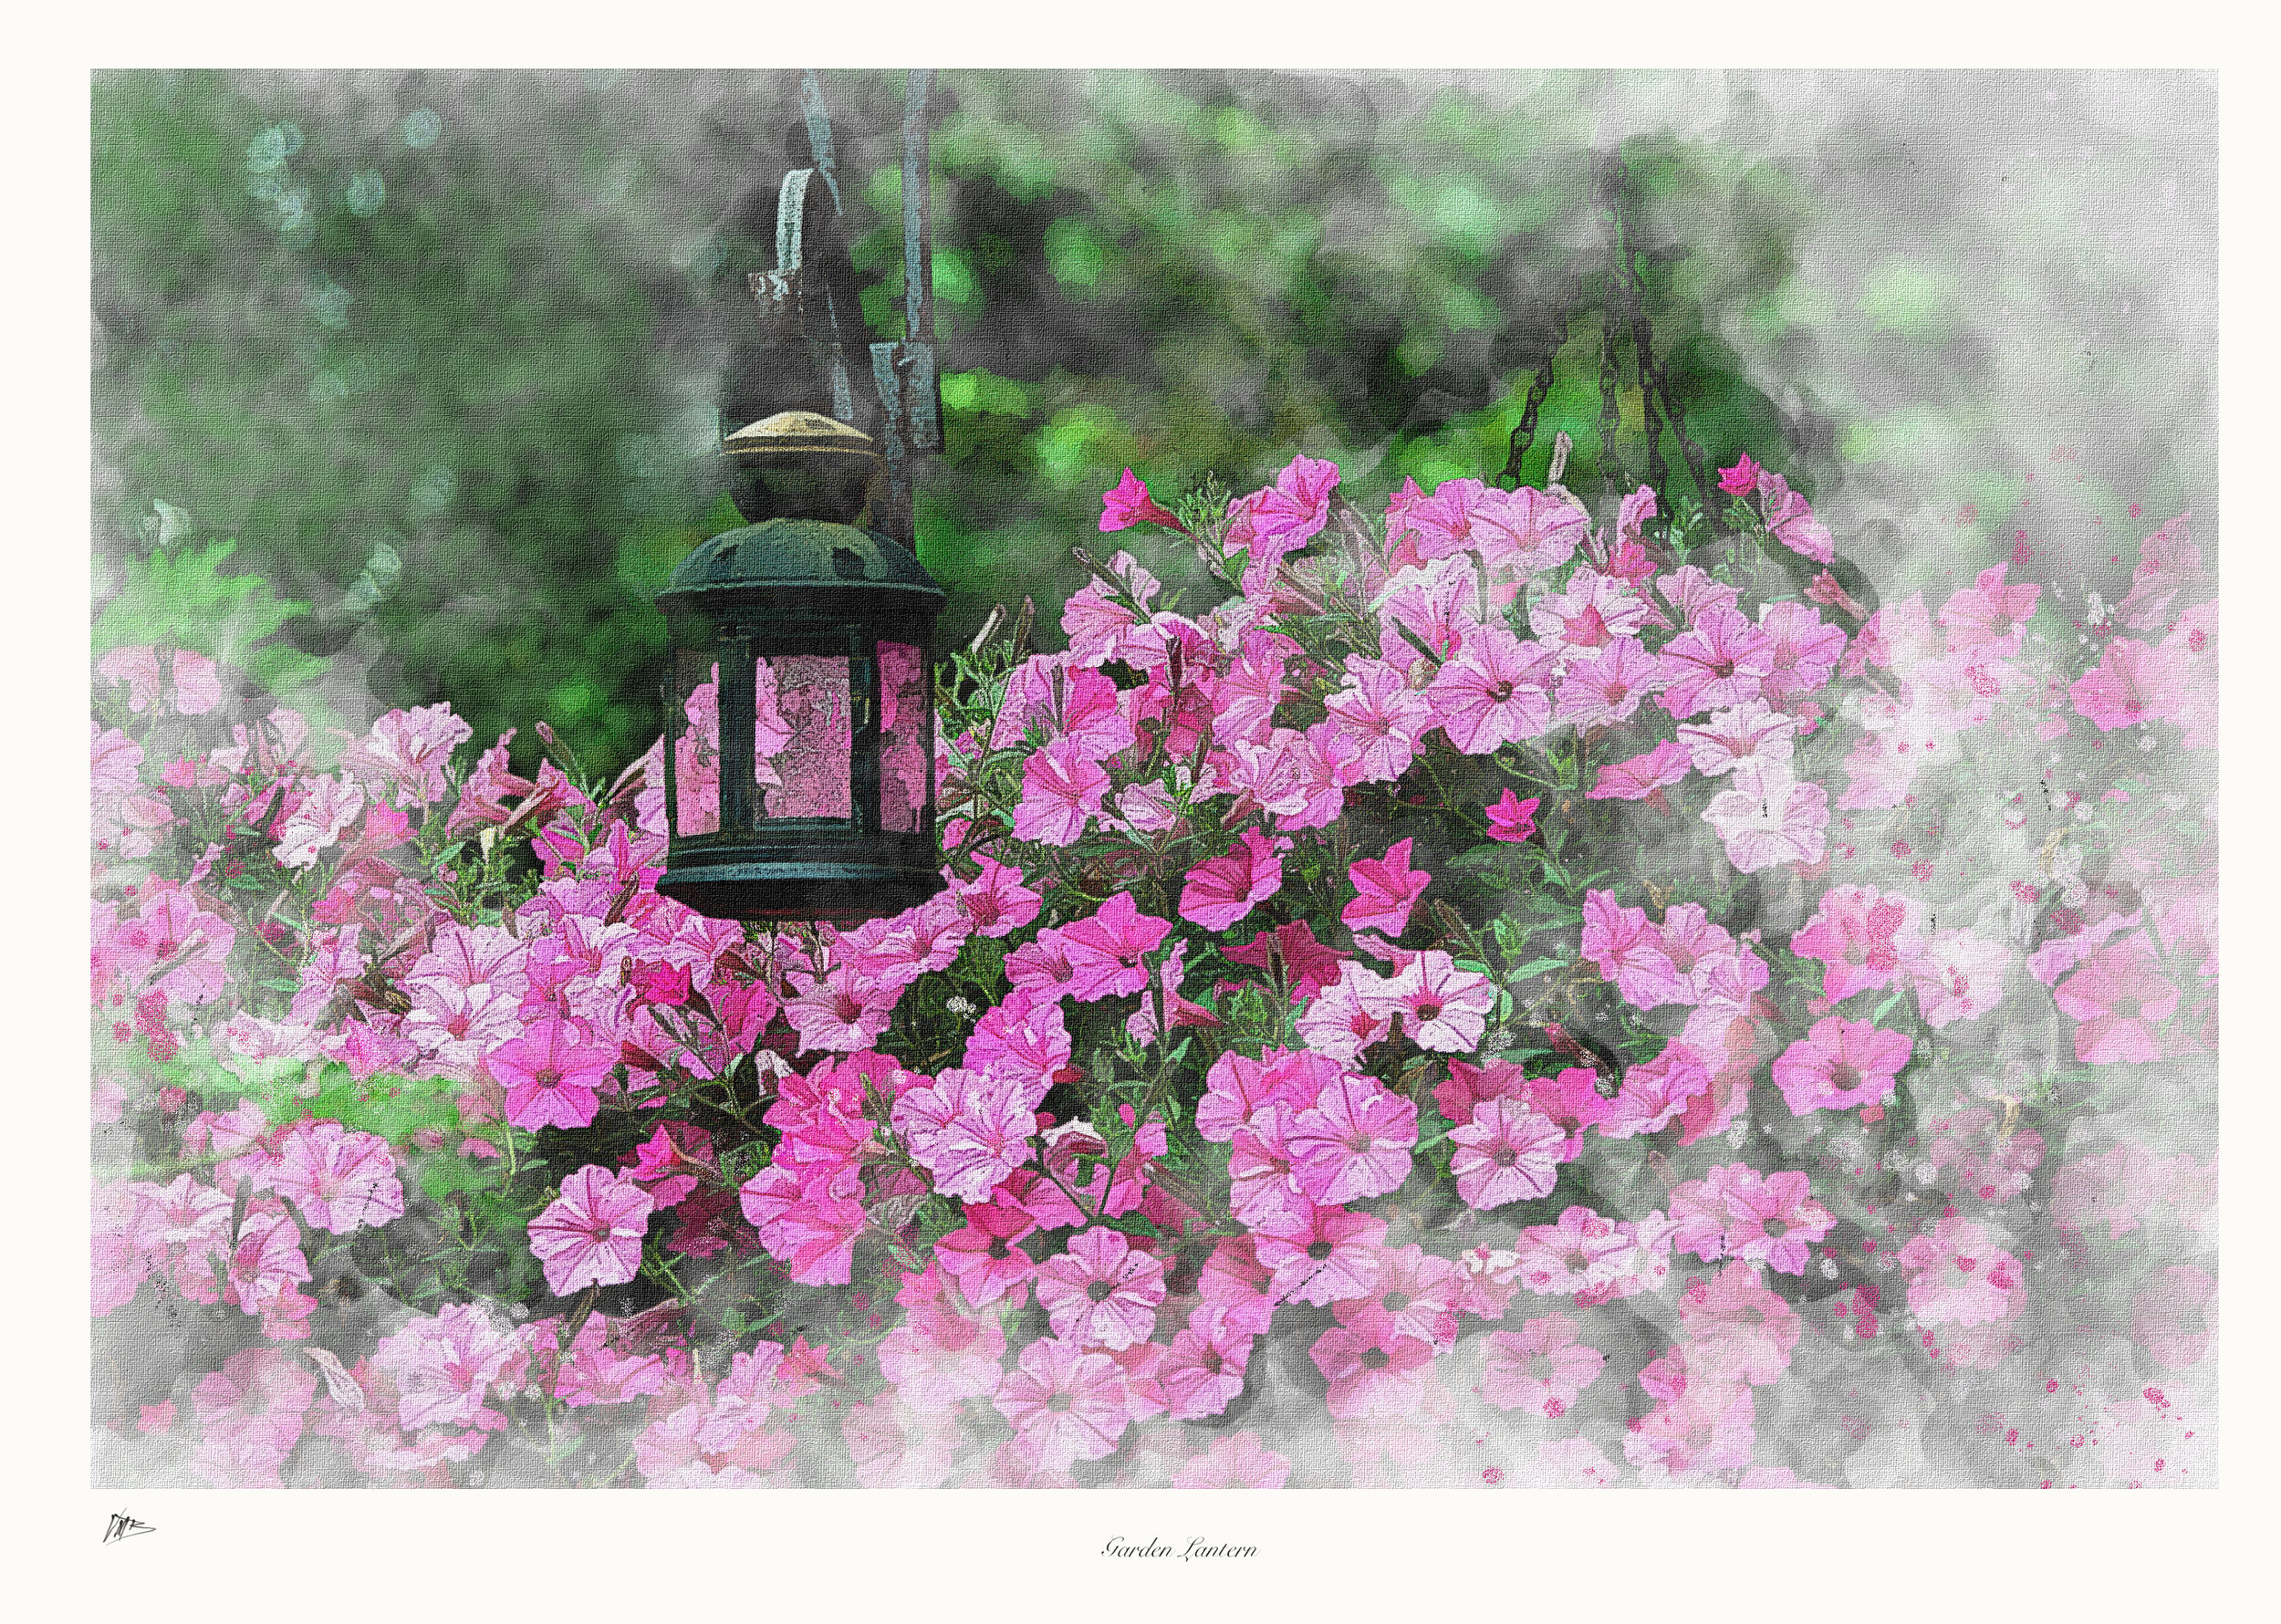 _Lantern and flowers.jpg